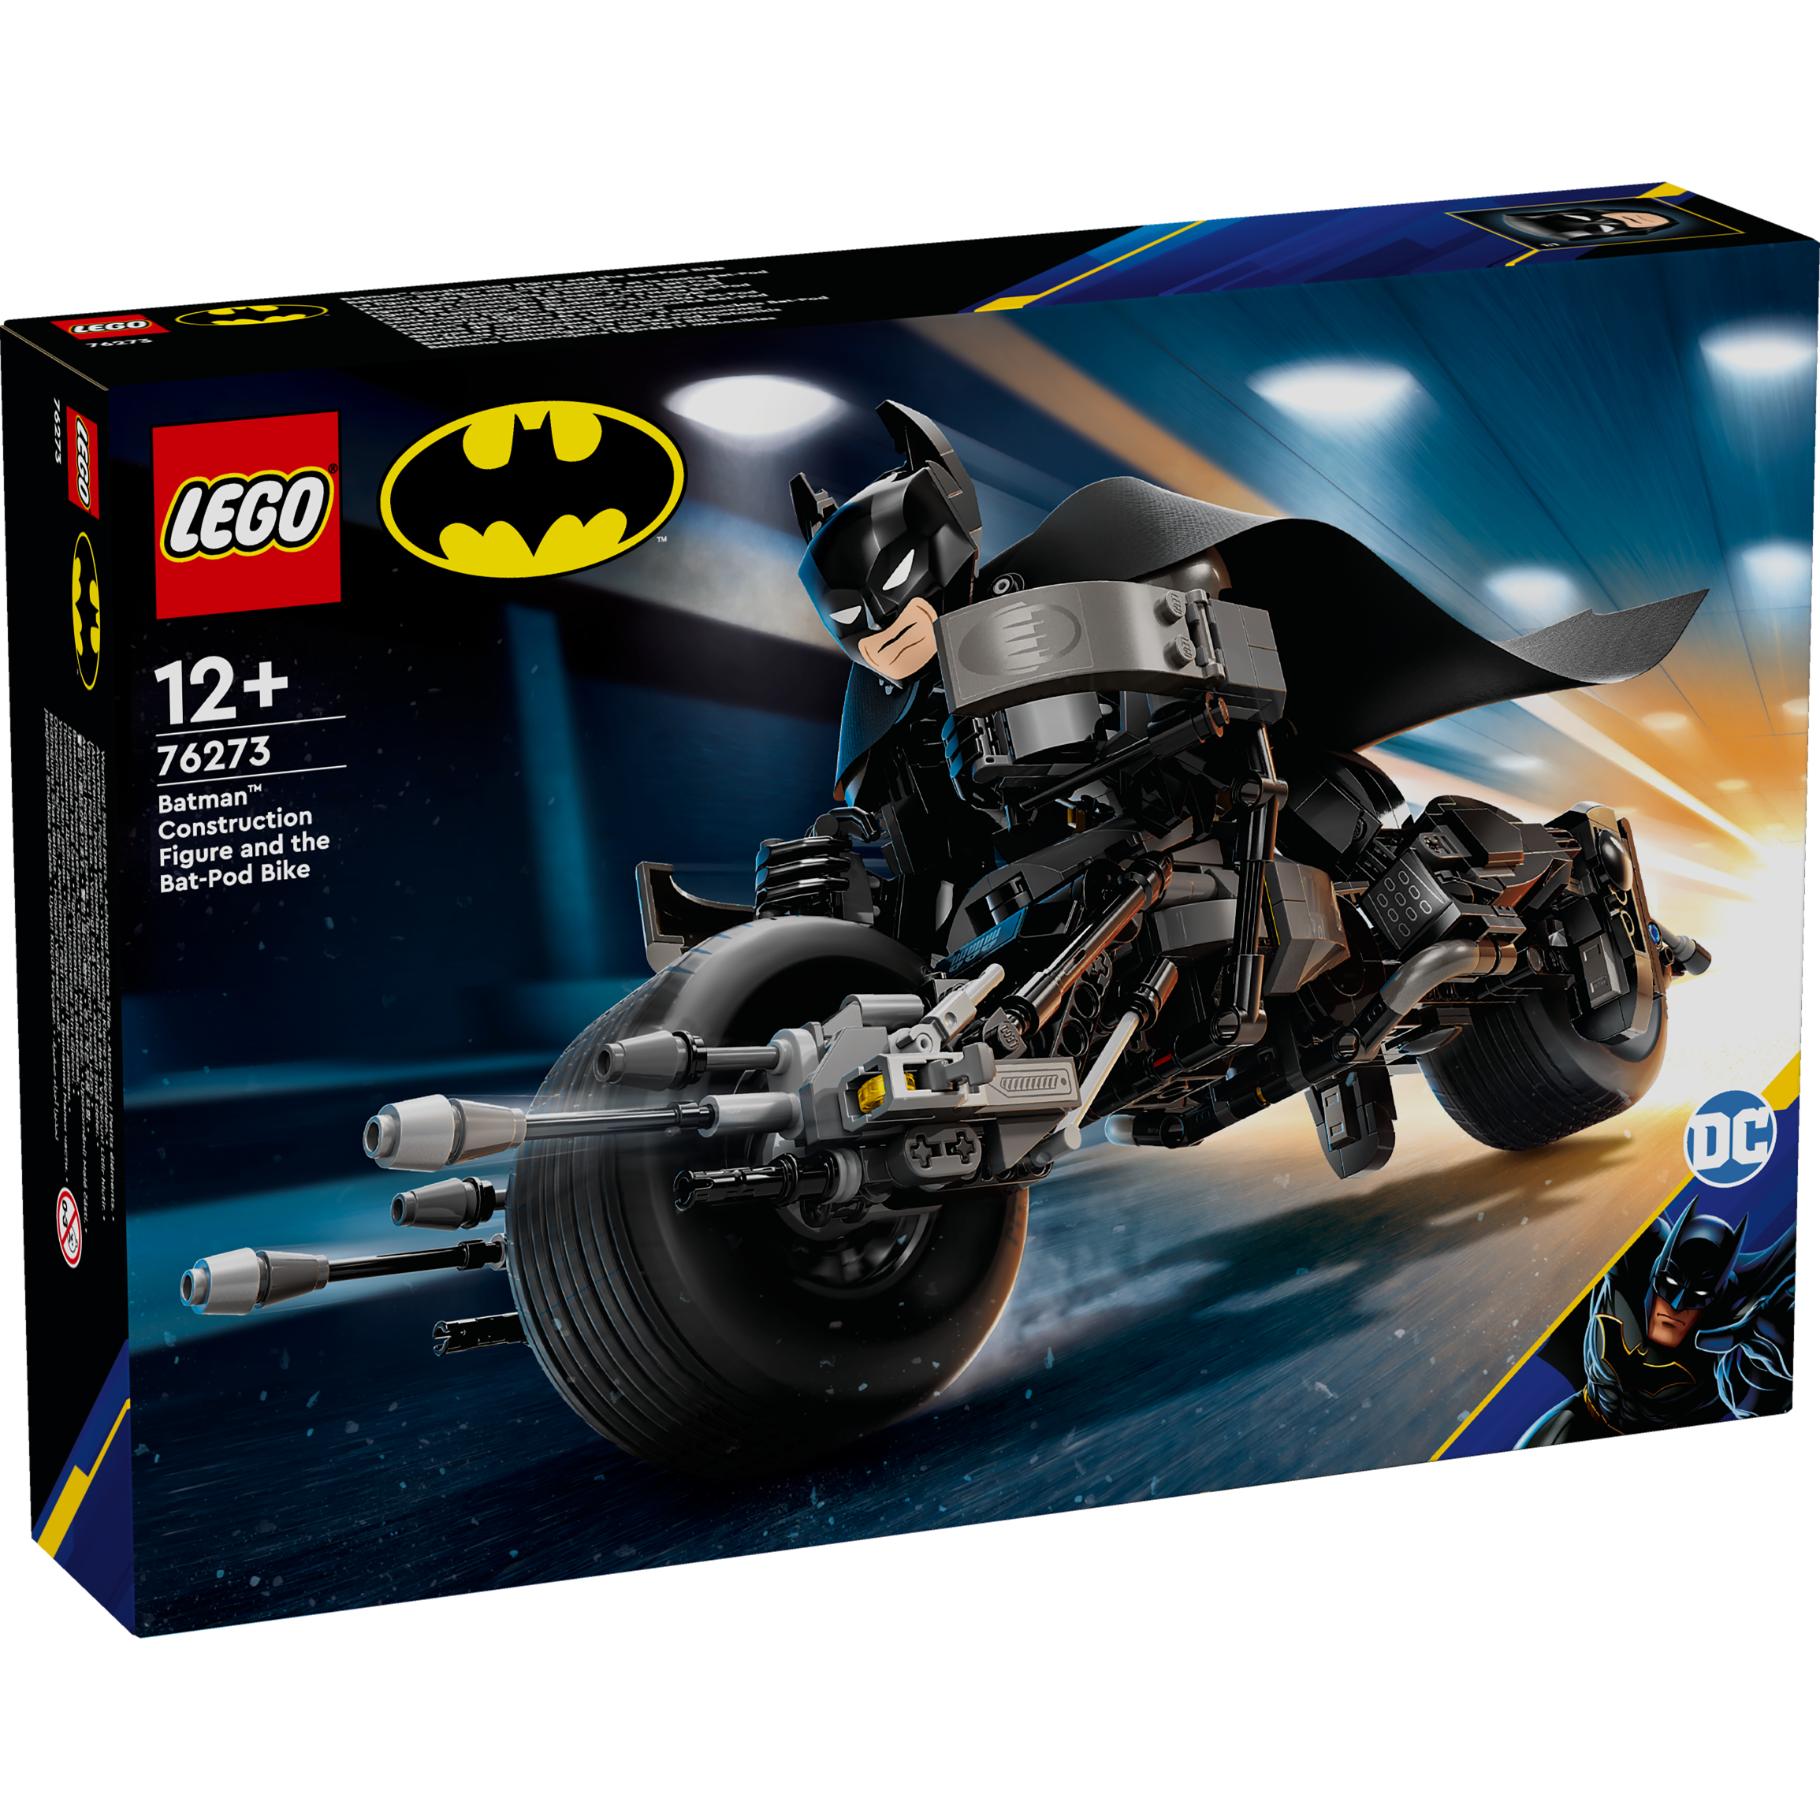 Lego 76273 DC Super Heroes Batman Baufigur mit Batpod, Konstruktionsspielzeug